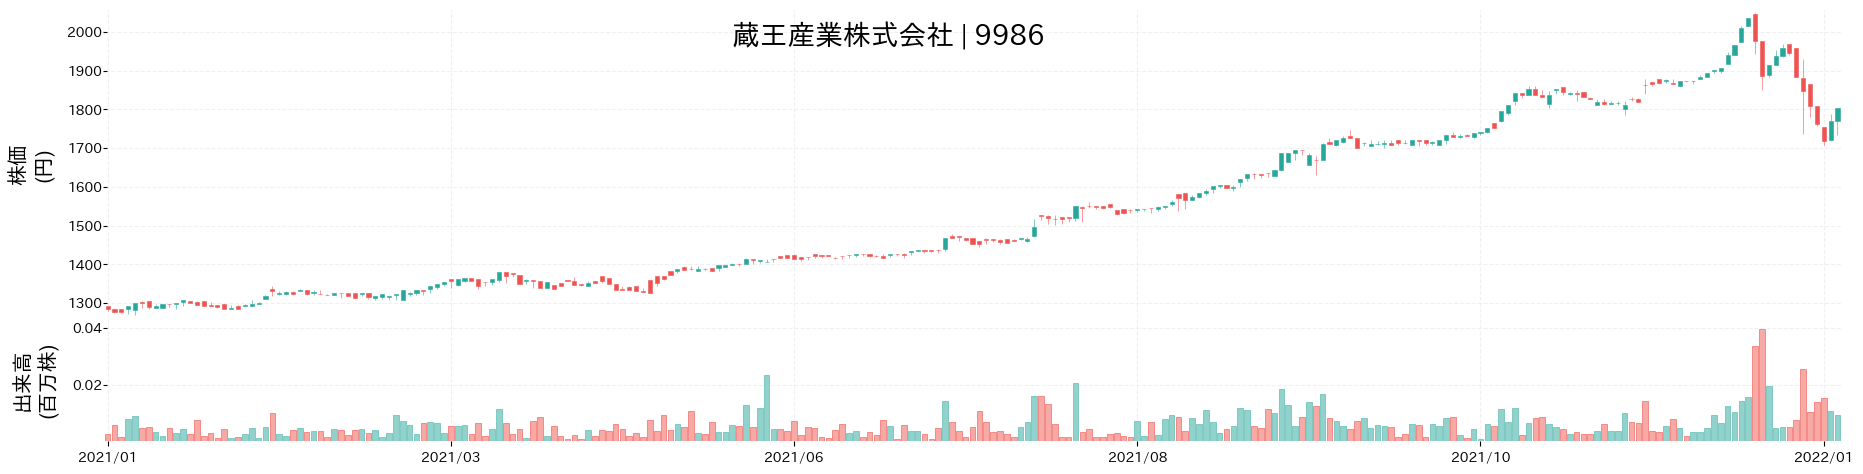 蔵王産業の株価推移(2021)